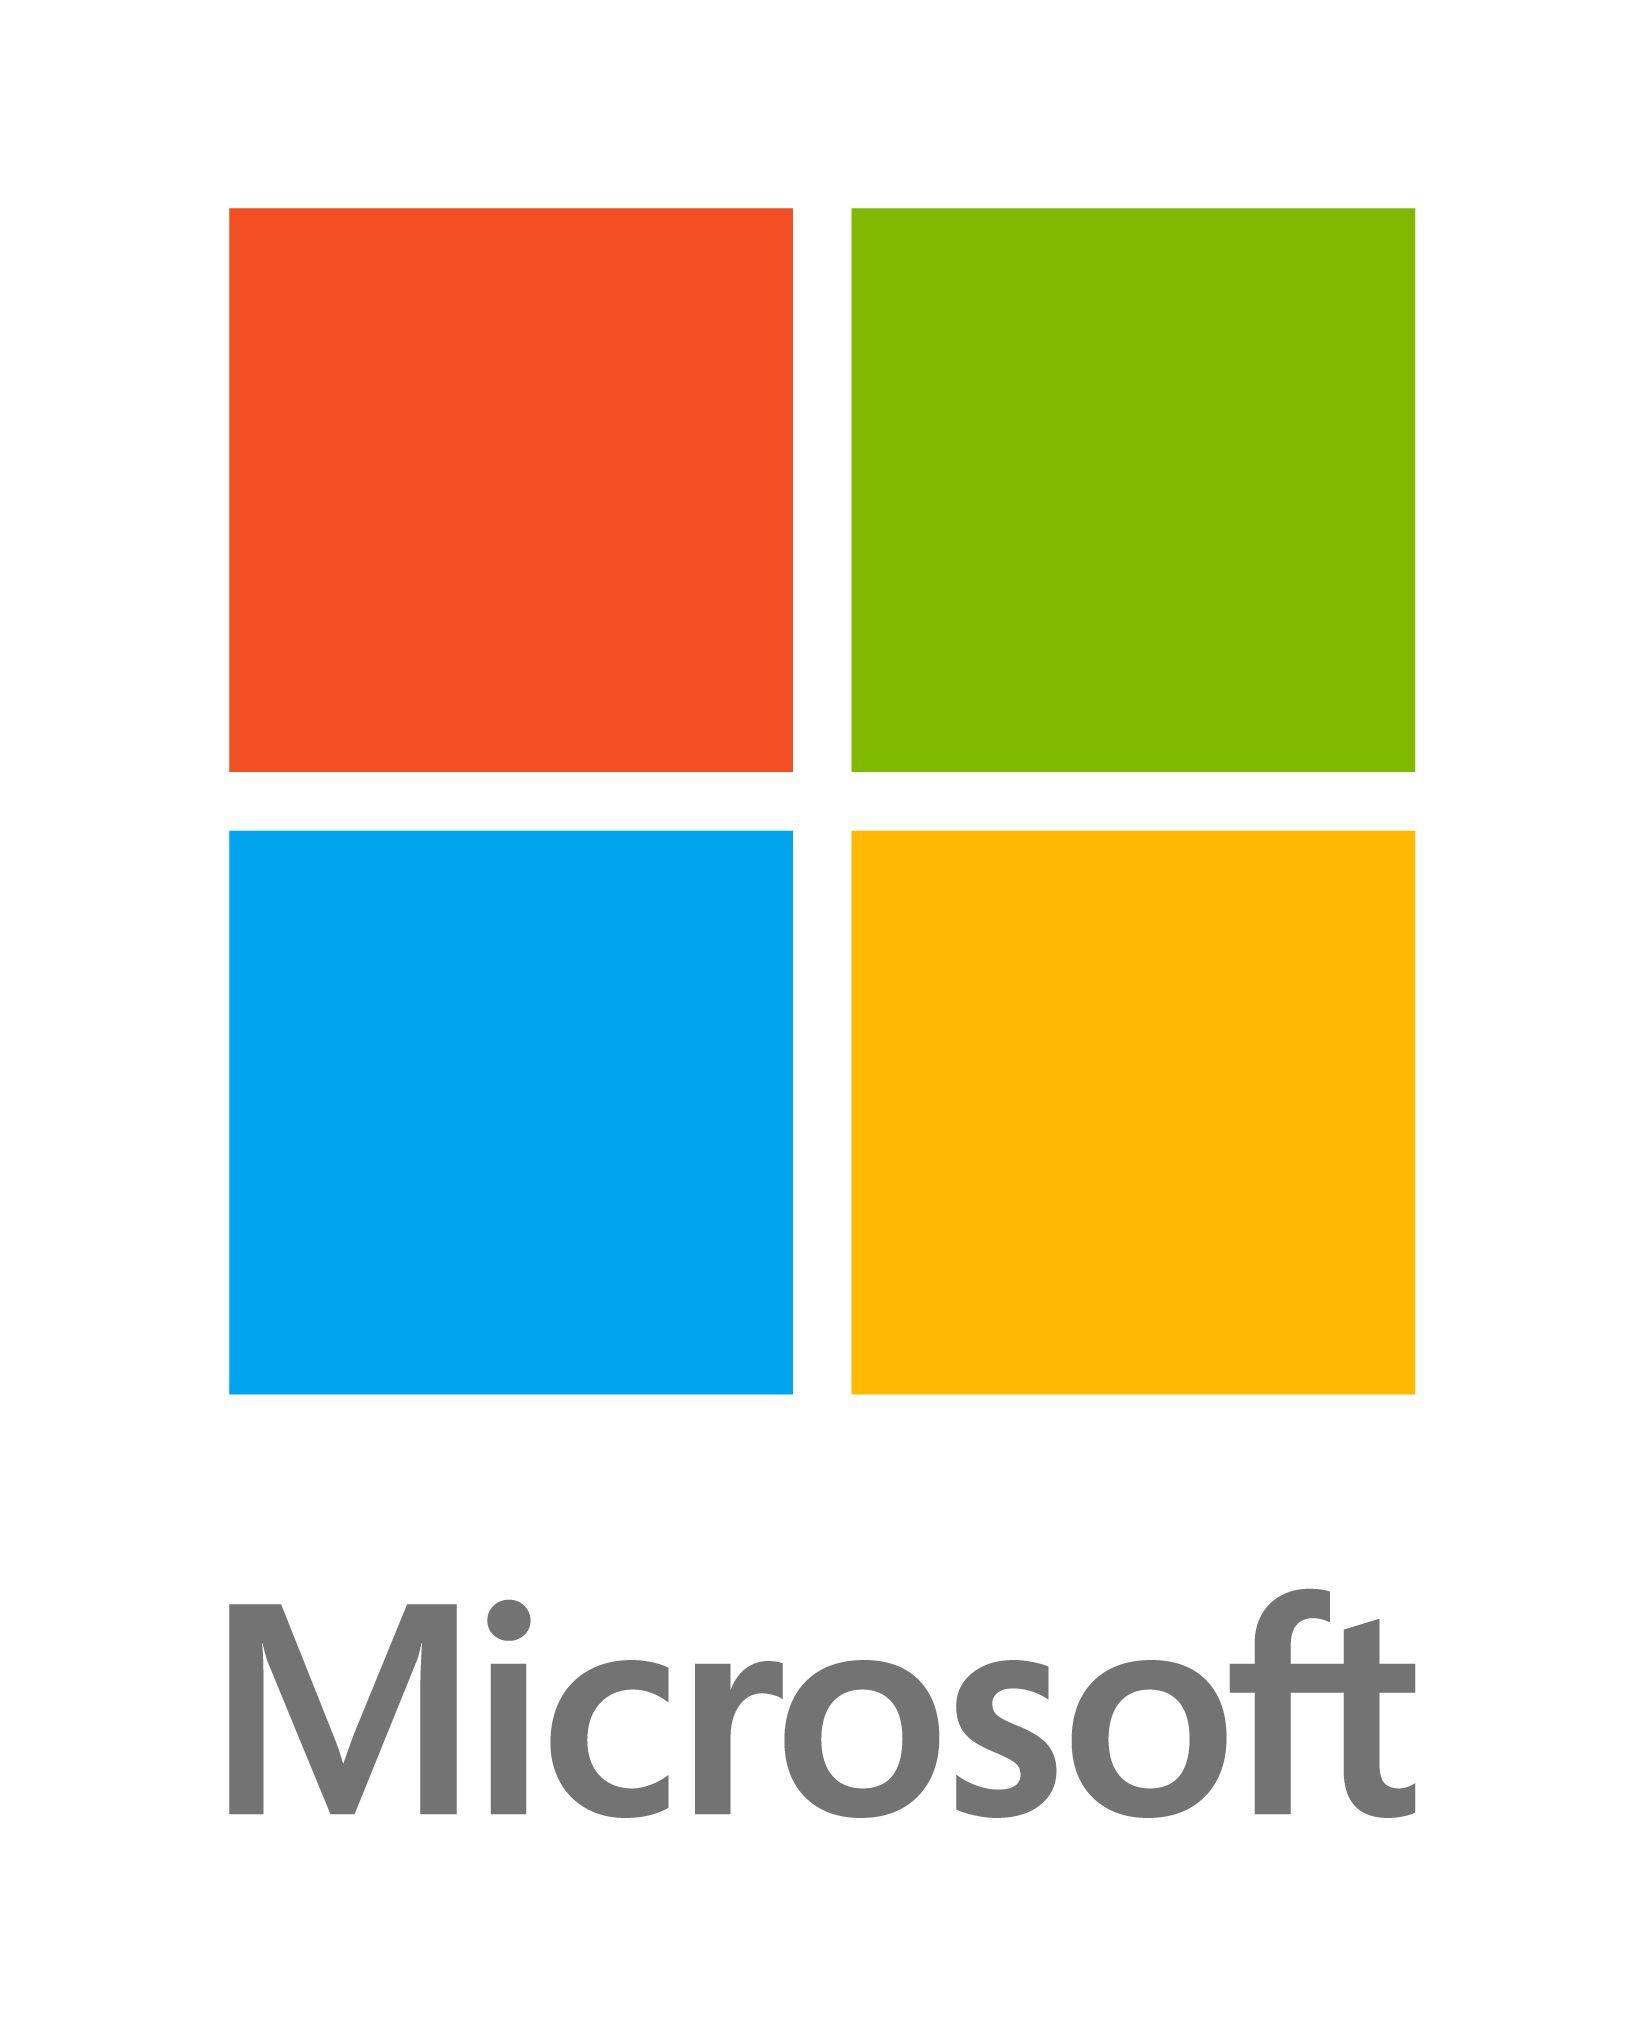 American Computer Technology Company Logo - Microsoft Corporation is an American multinational technology ...